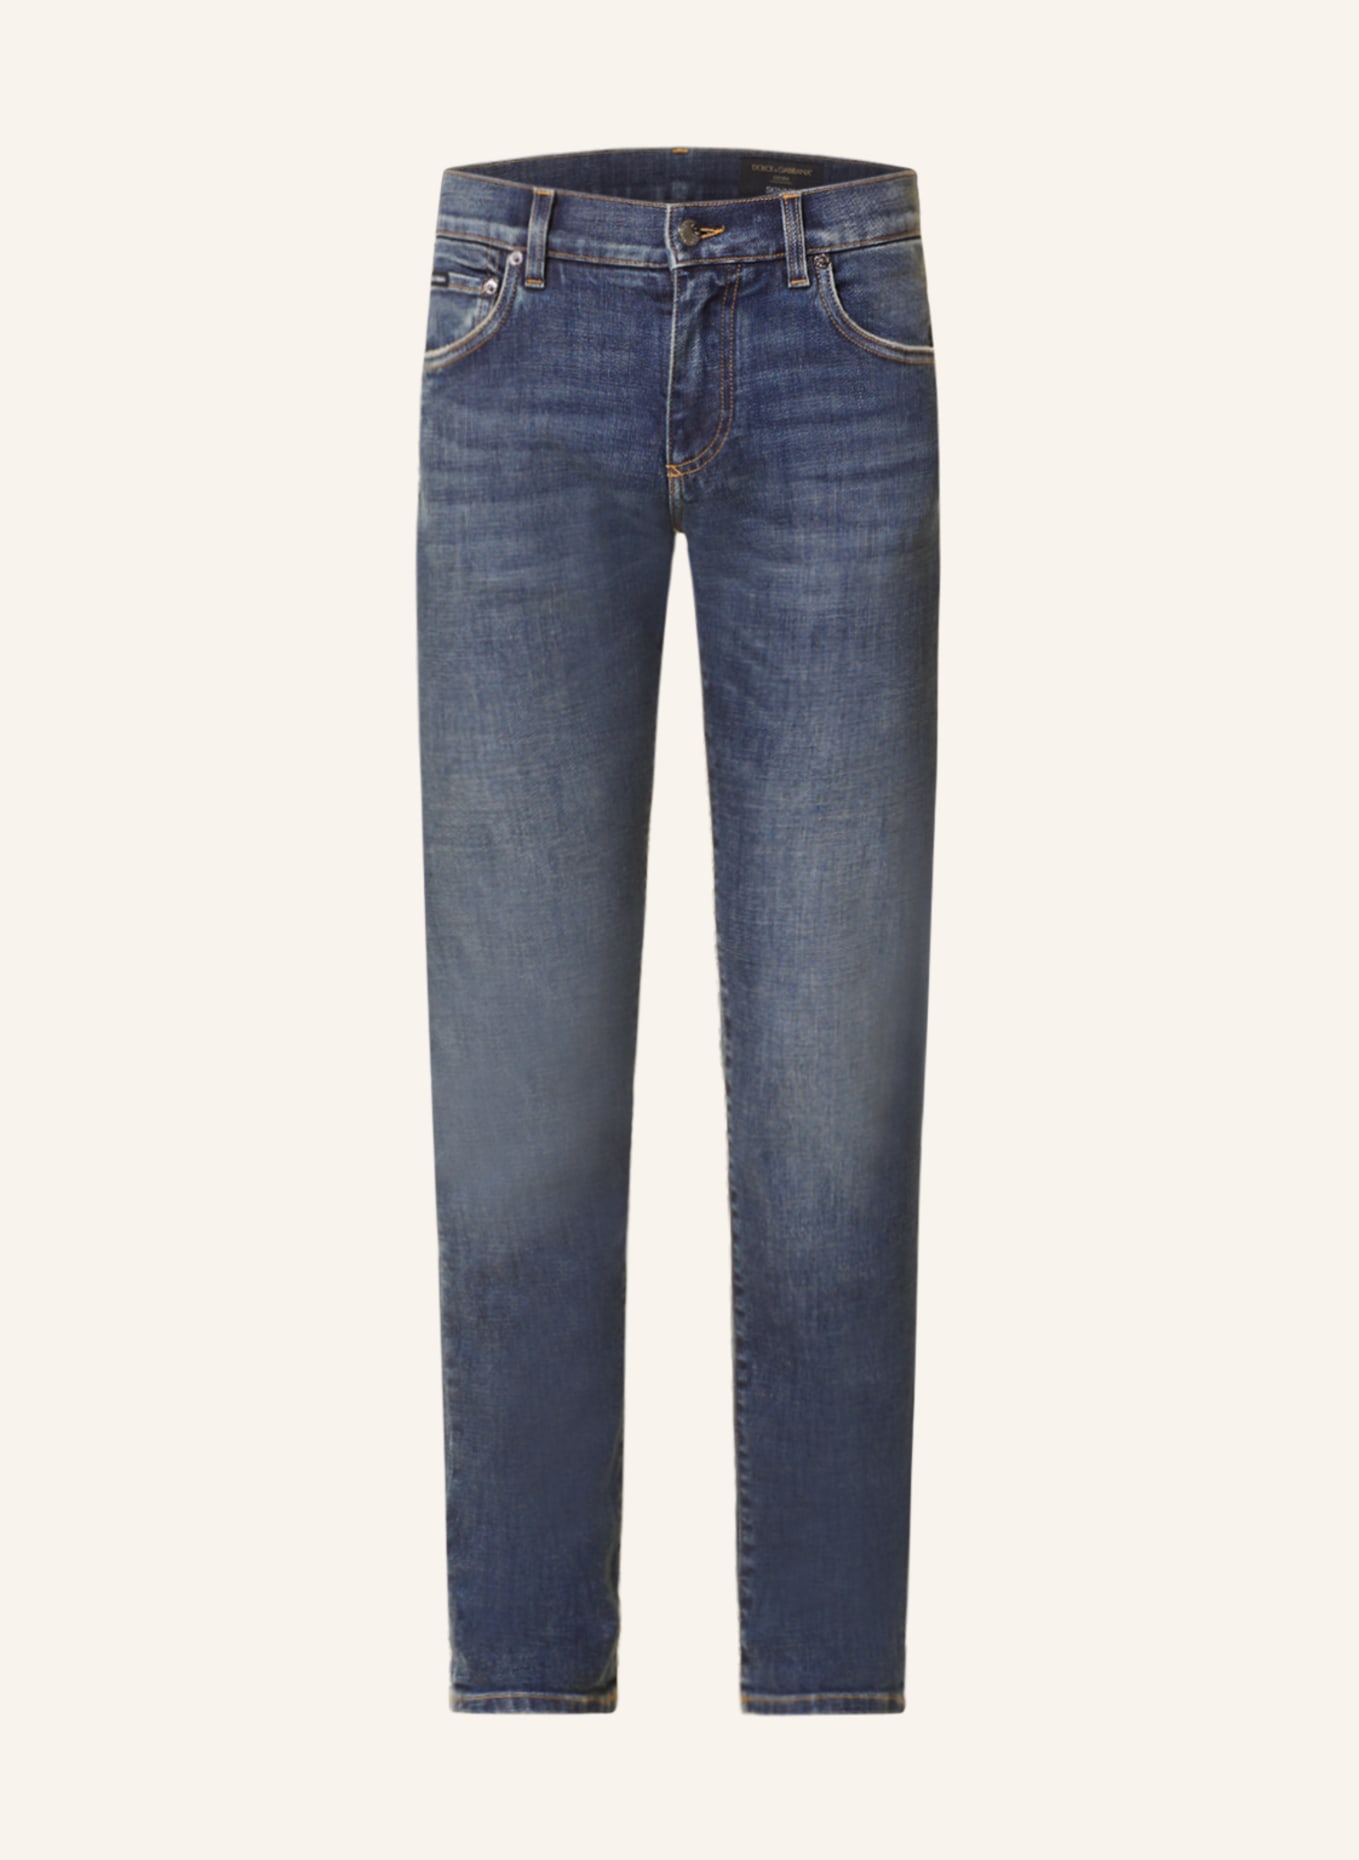 DOLCE & GABBANA Jeans Skinny Fit, Farbe: S9001 VARIANTE ABBINATA (Bild 1)